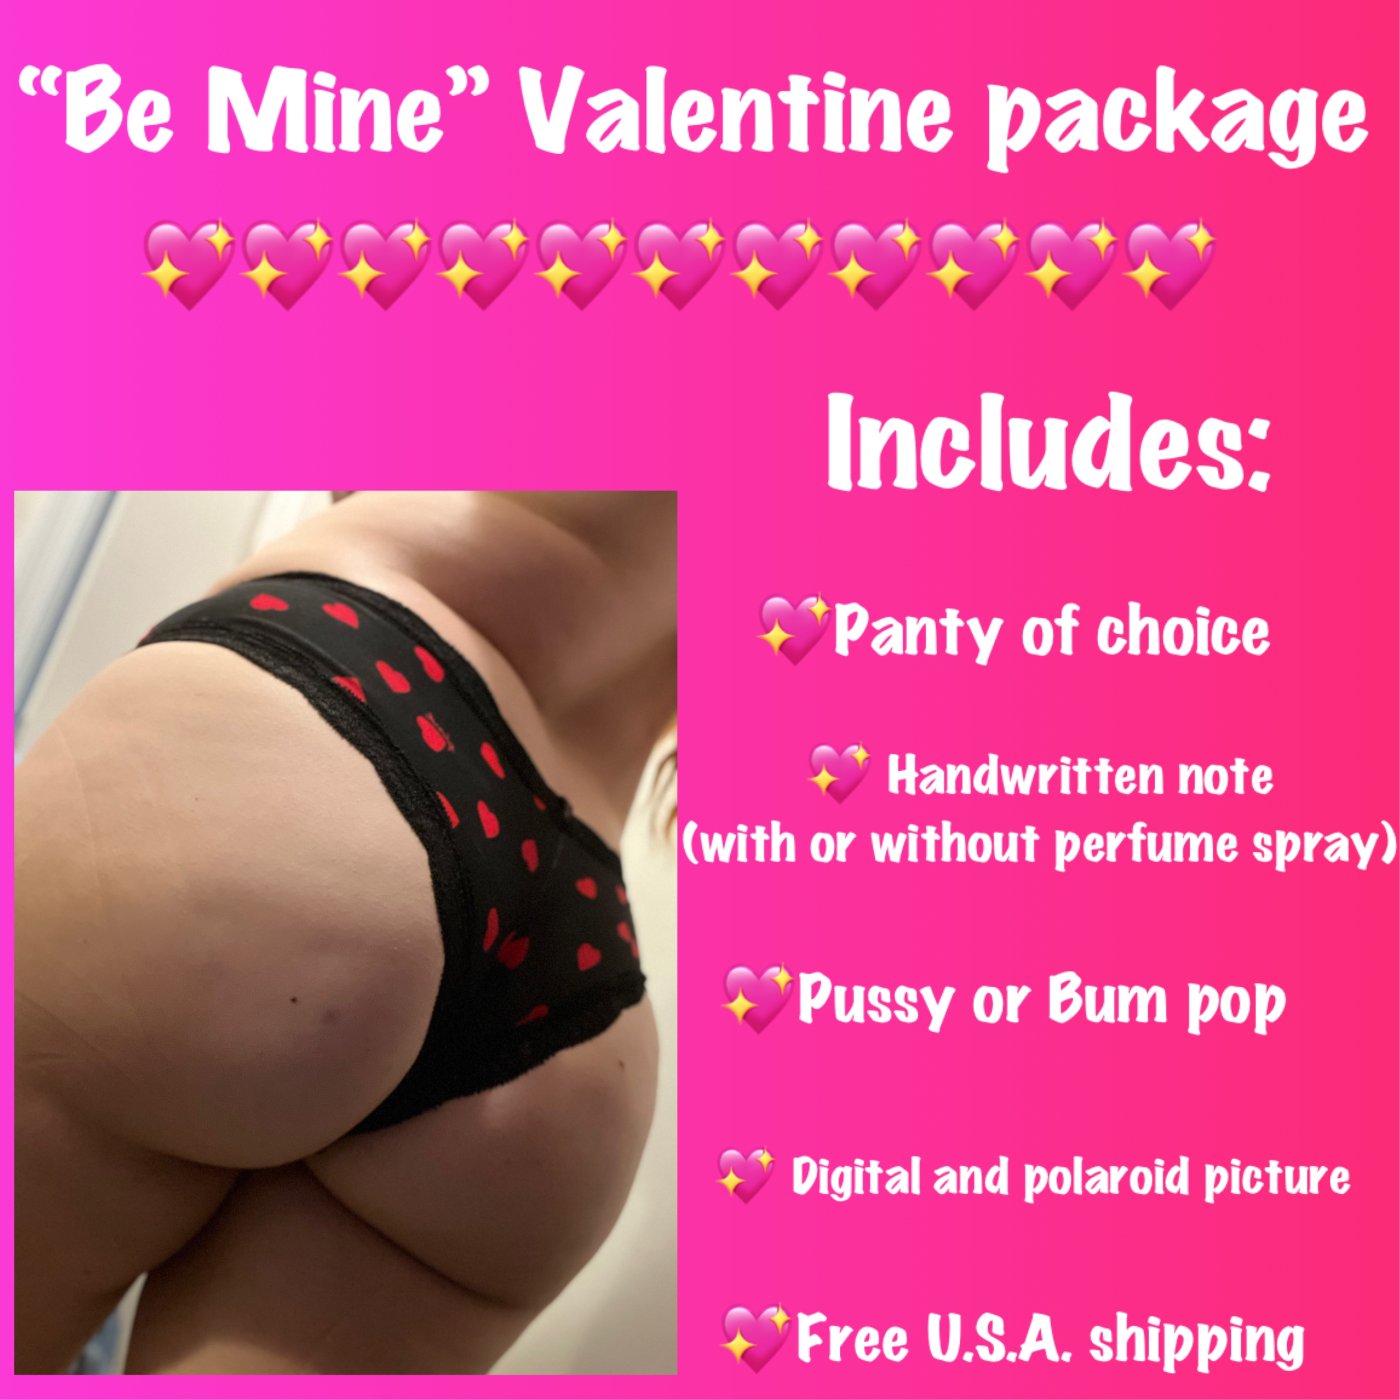 “Be Mine” valentine package